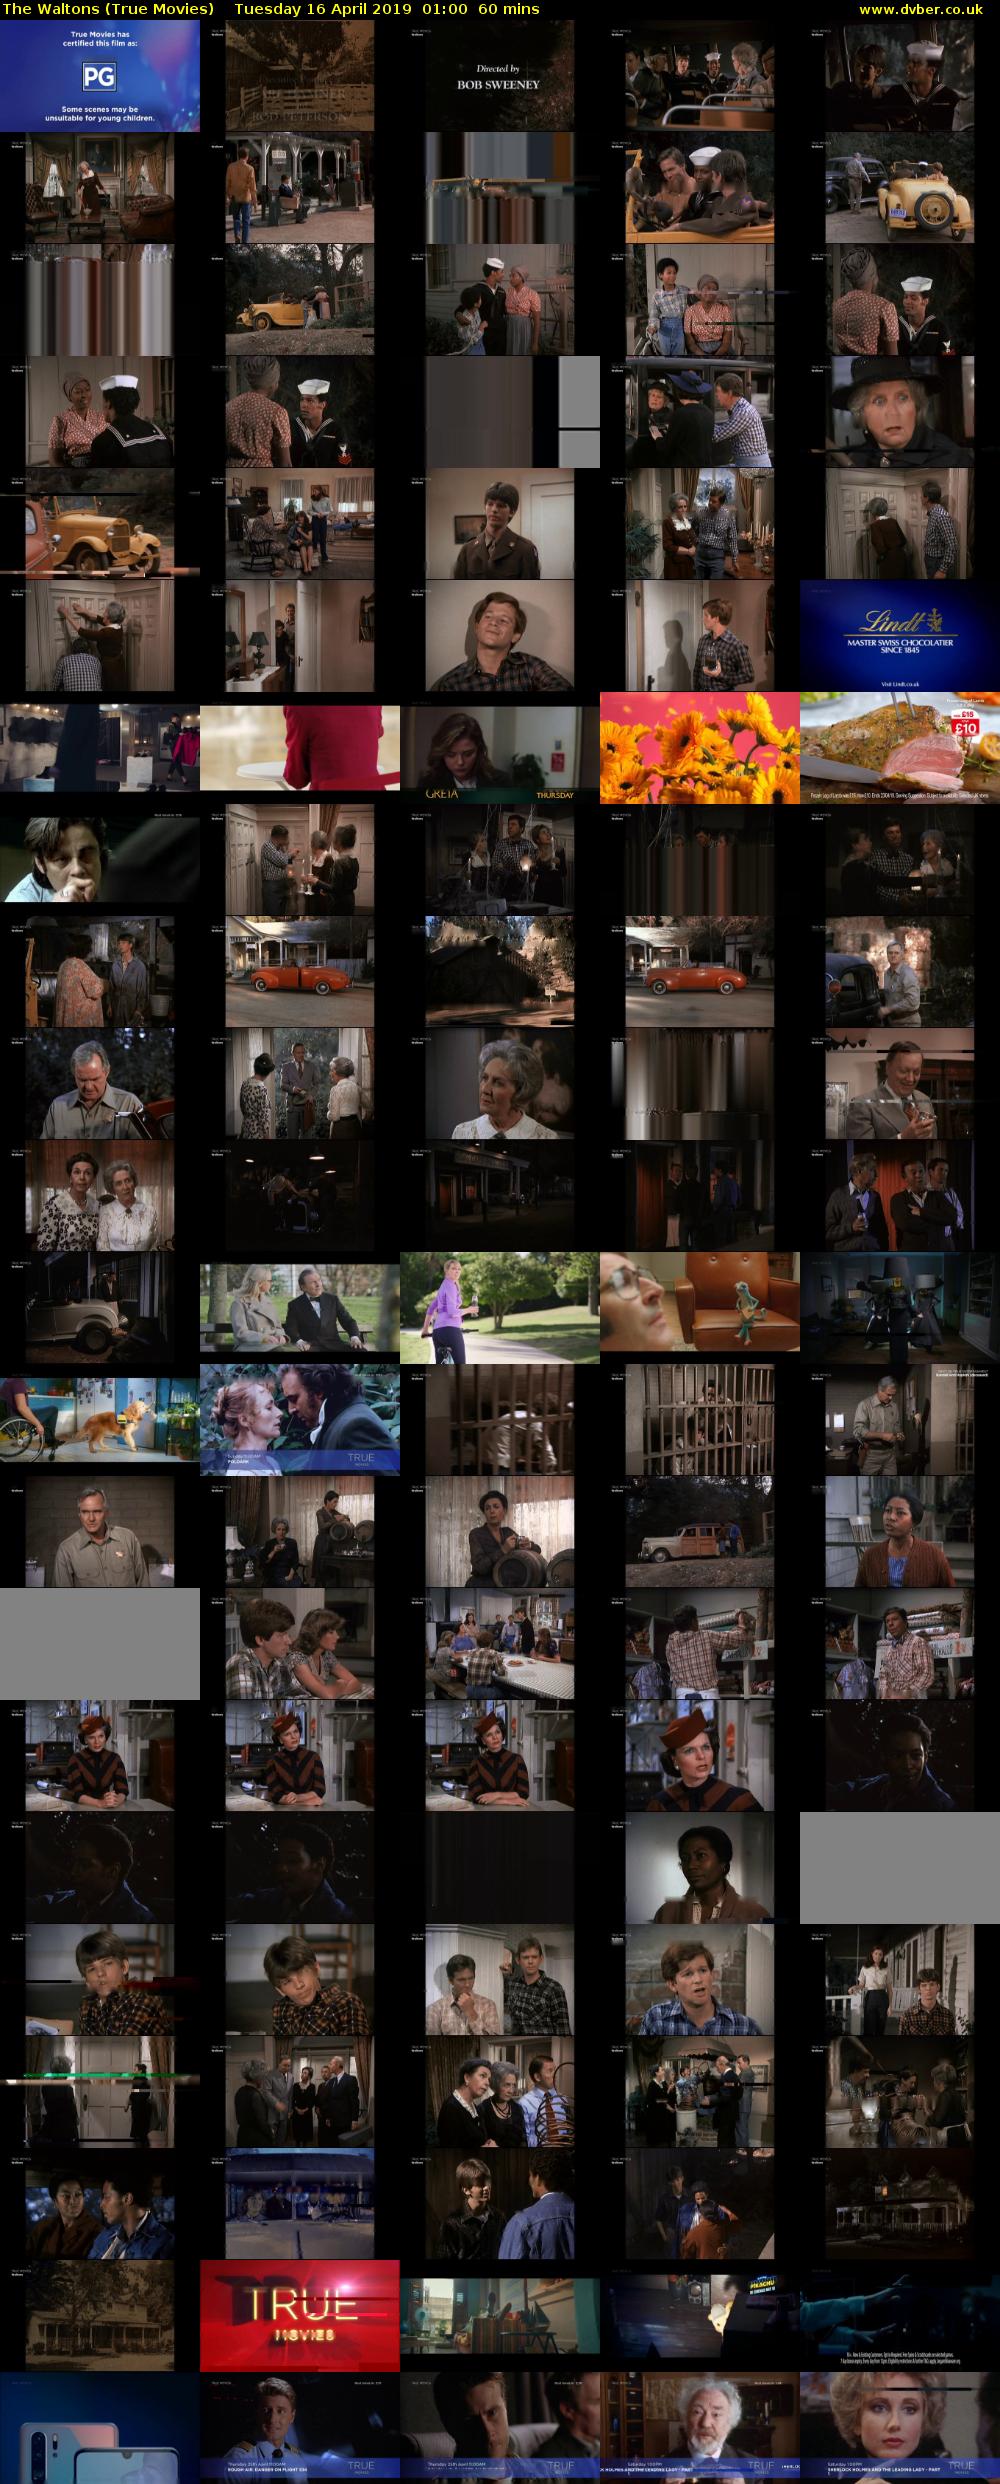 The Waltons (True Movies) Tuesday 16 April 2019 01:00 - 02:00